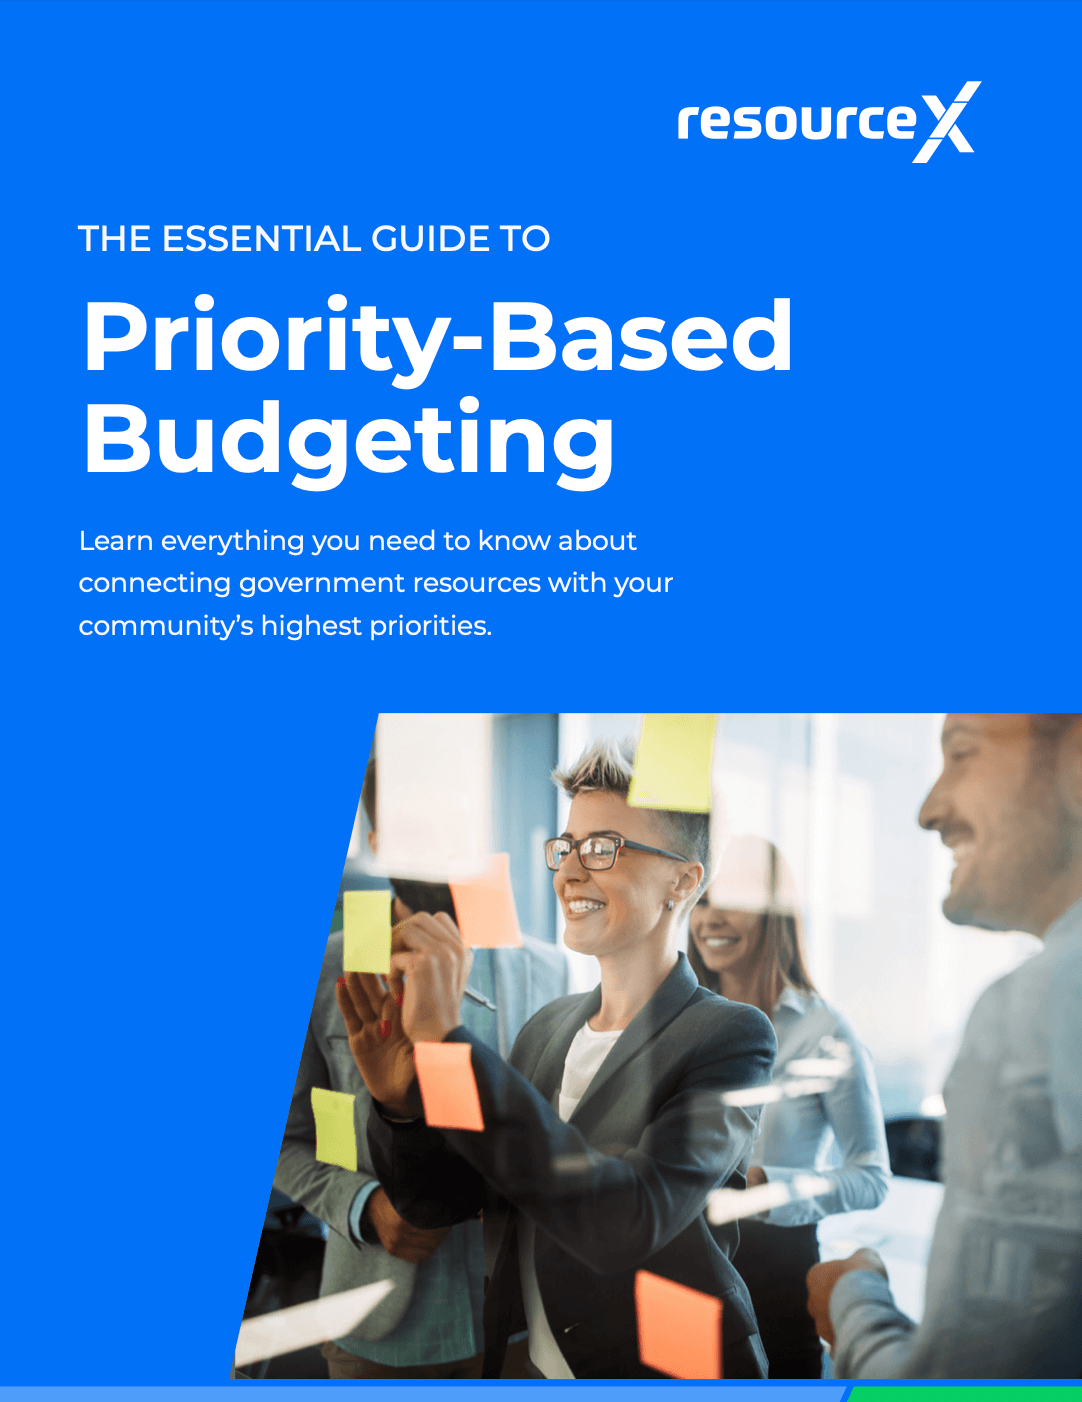 Priority-Based Budgeting 101